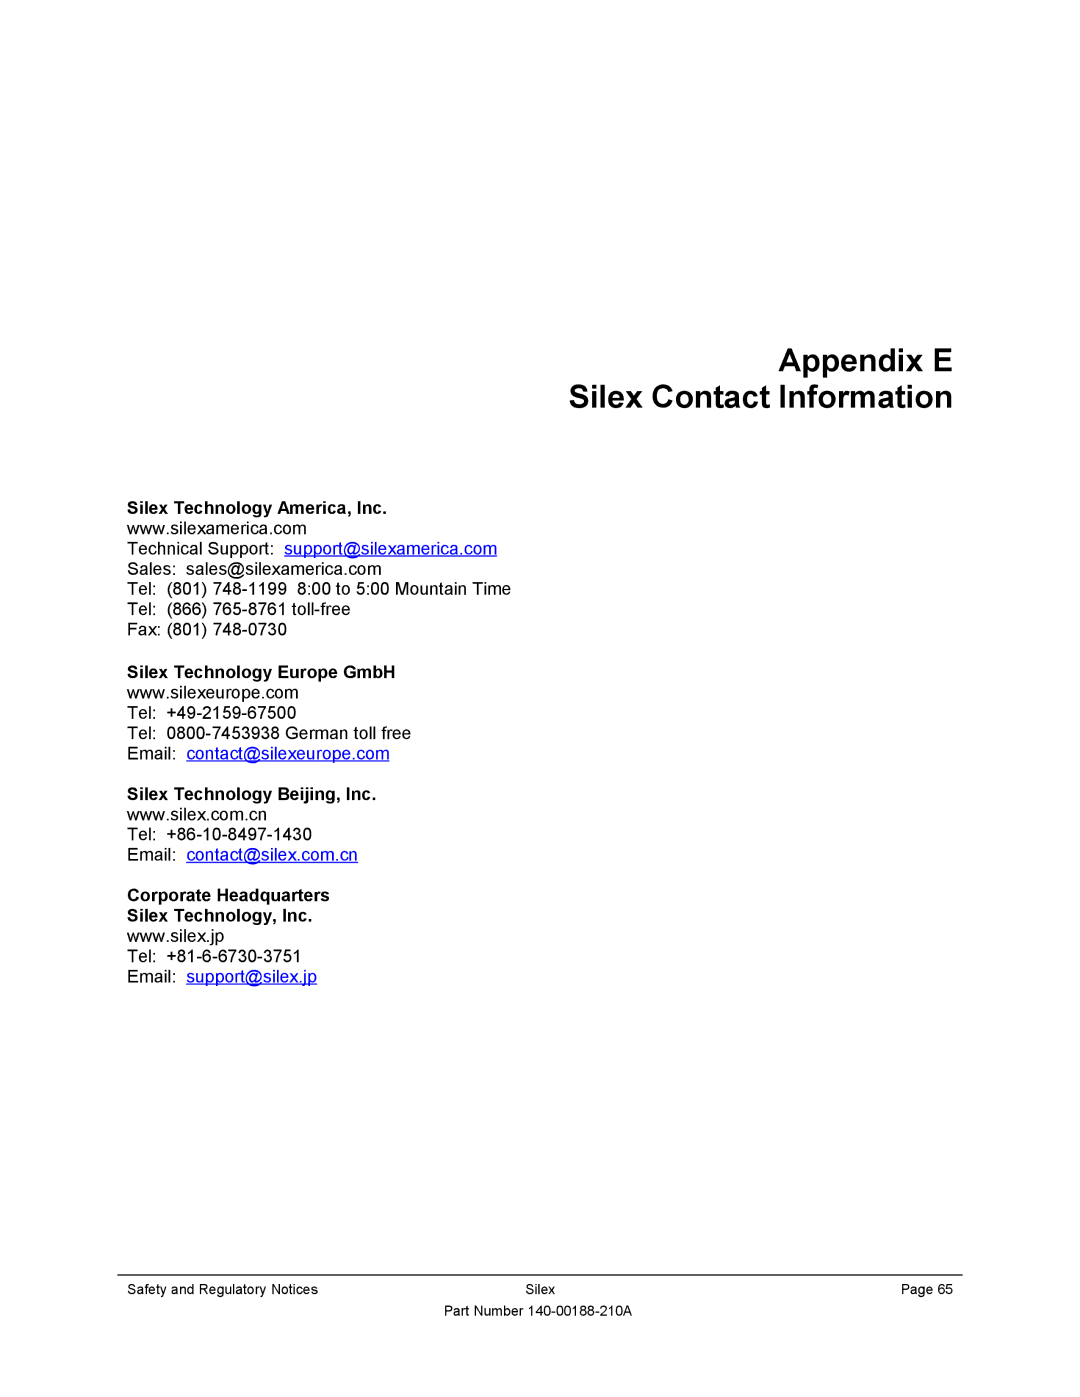 Silex technology SX-500-1402 manual Appendix E Silex Contact Information, Silex Technology America, Inc 